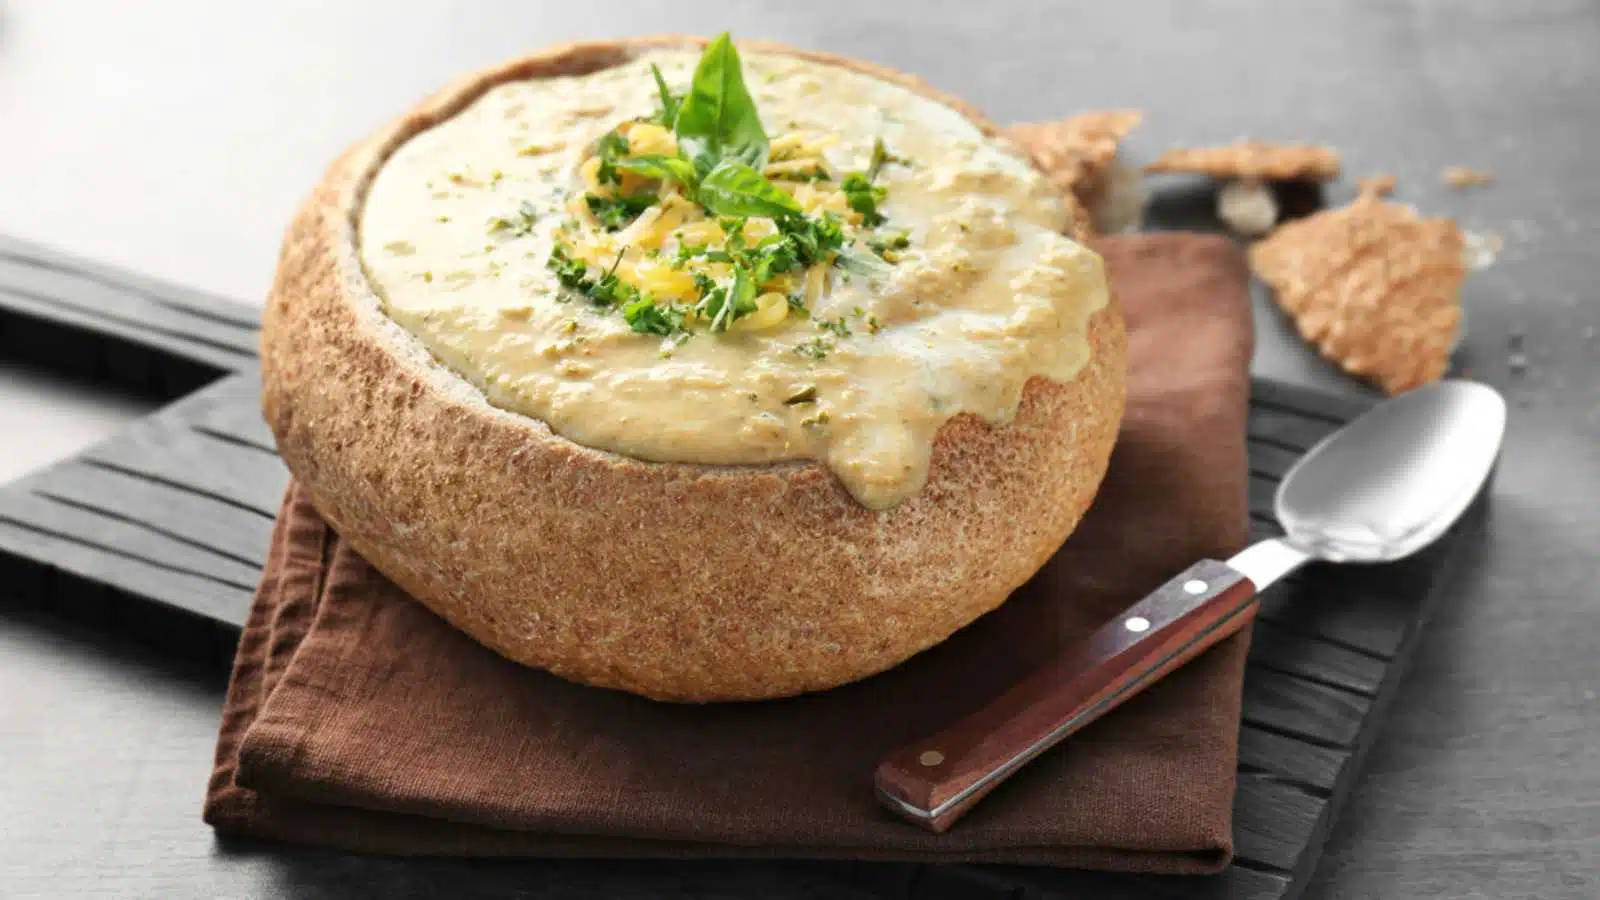 Broccoli cheddar soup in bread bowl on wooden board